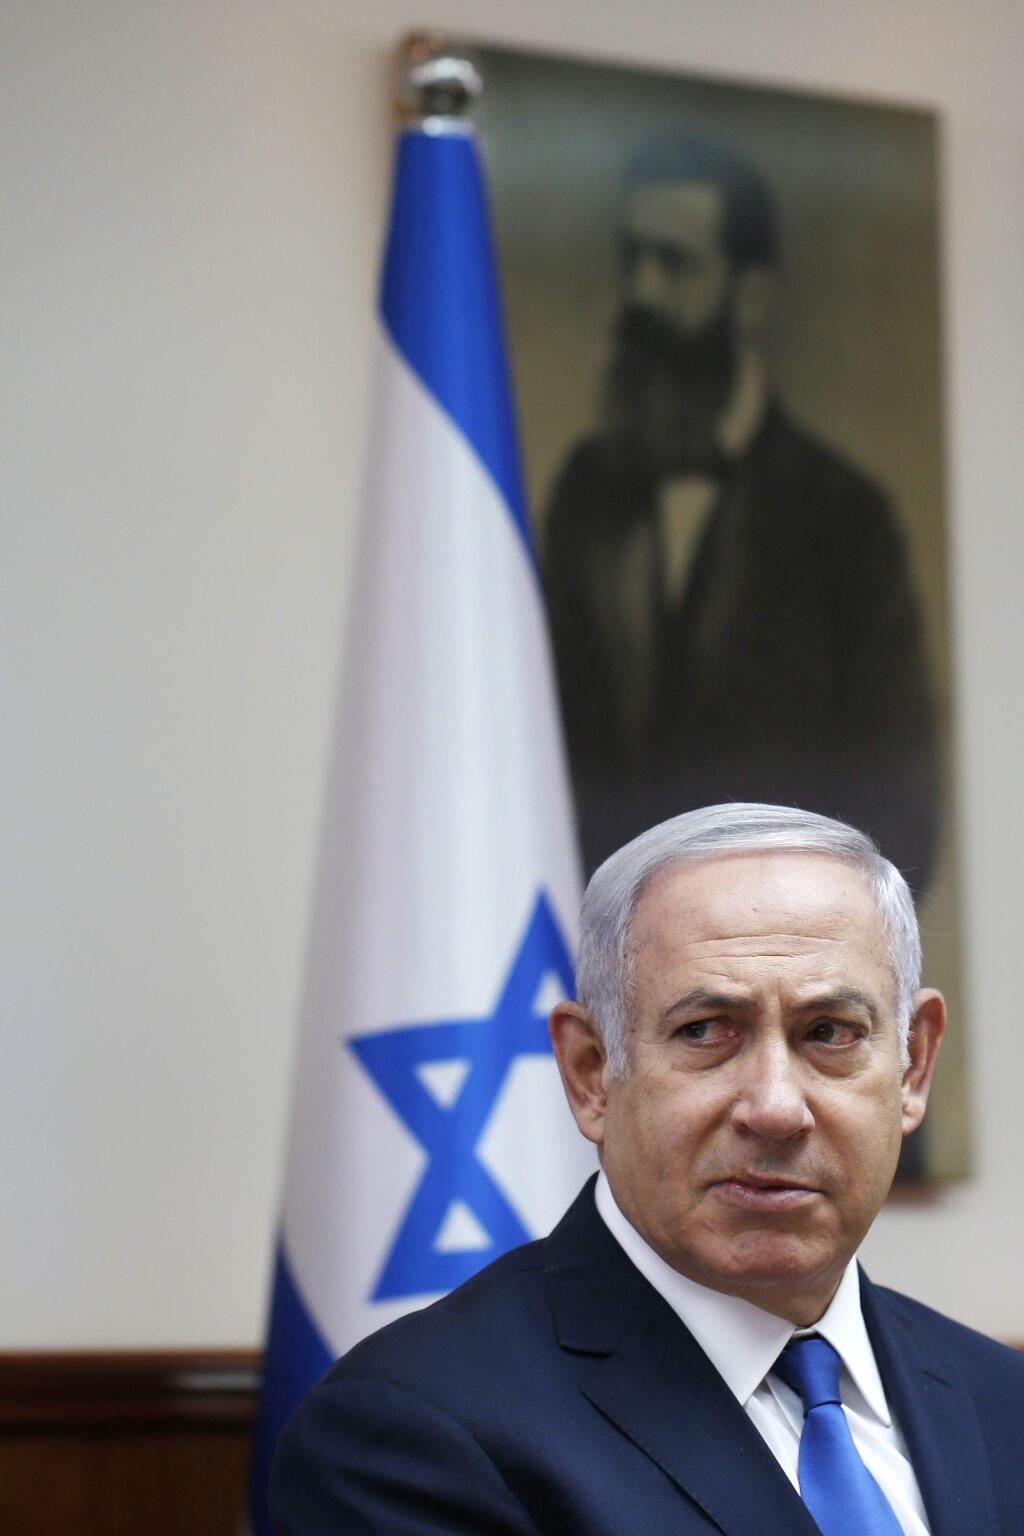 Israeli Prime Minister Benjamin Netanyahu chairs the weekly cabinet meeting at his office in Jerusalem, Sunday, July 15, 2018. (Ronen Zvulun/Pool via AP)